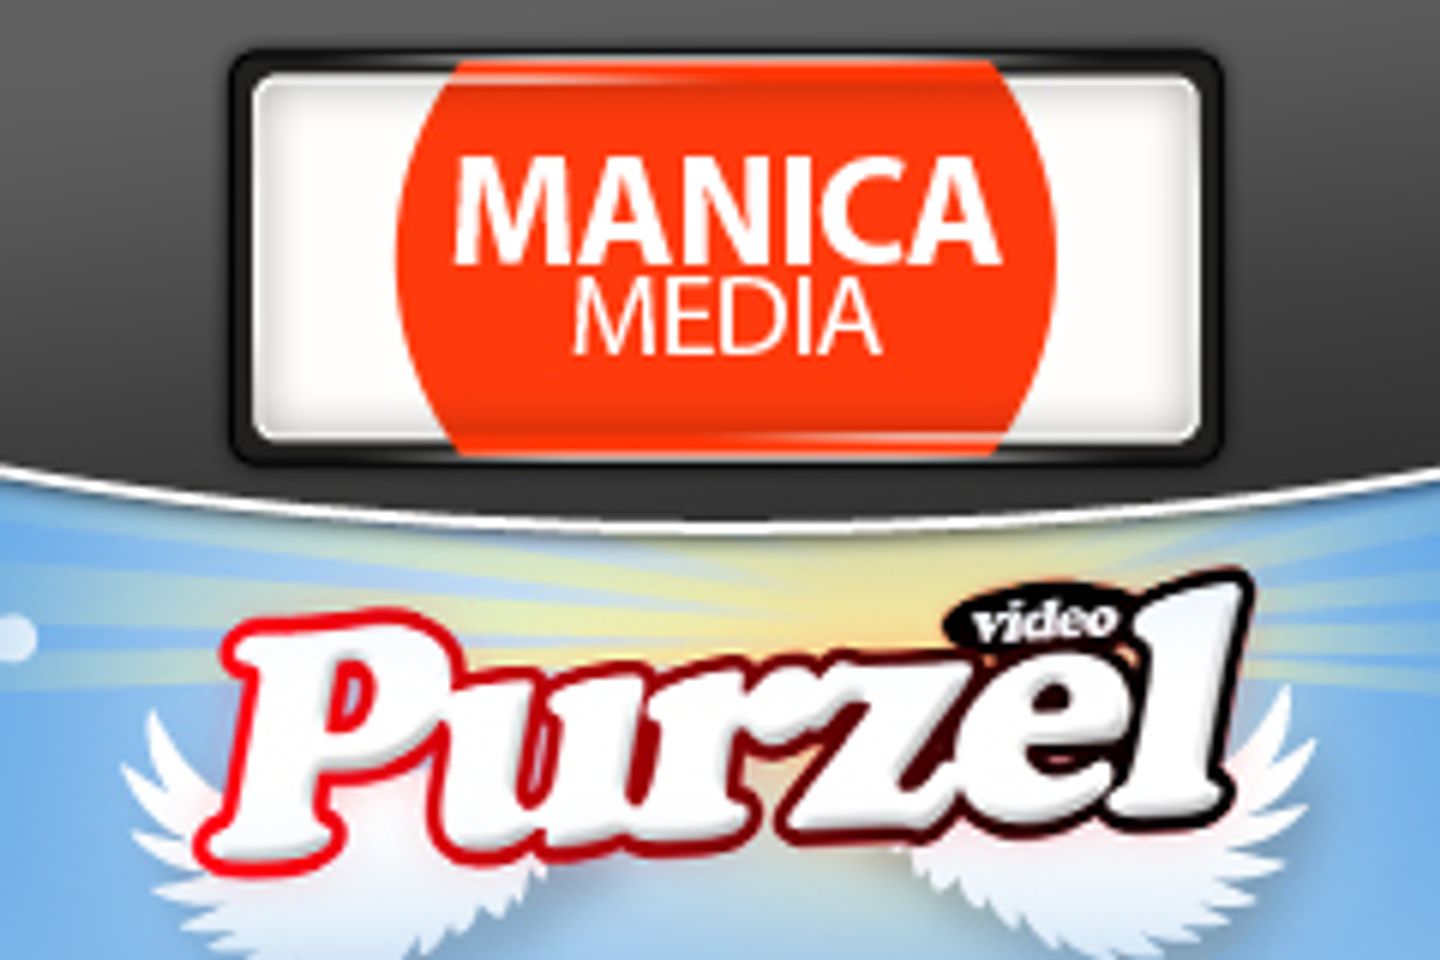 Manica Media Launches PurzelVideos.com